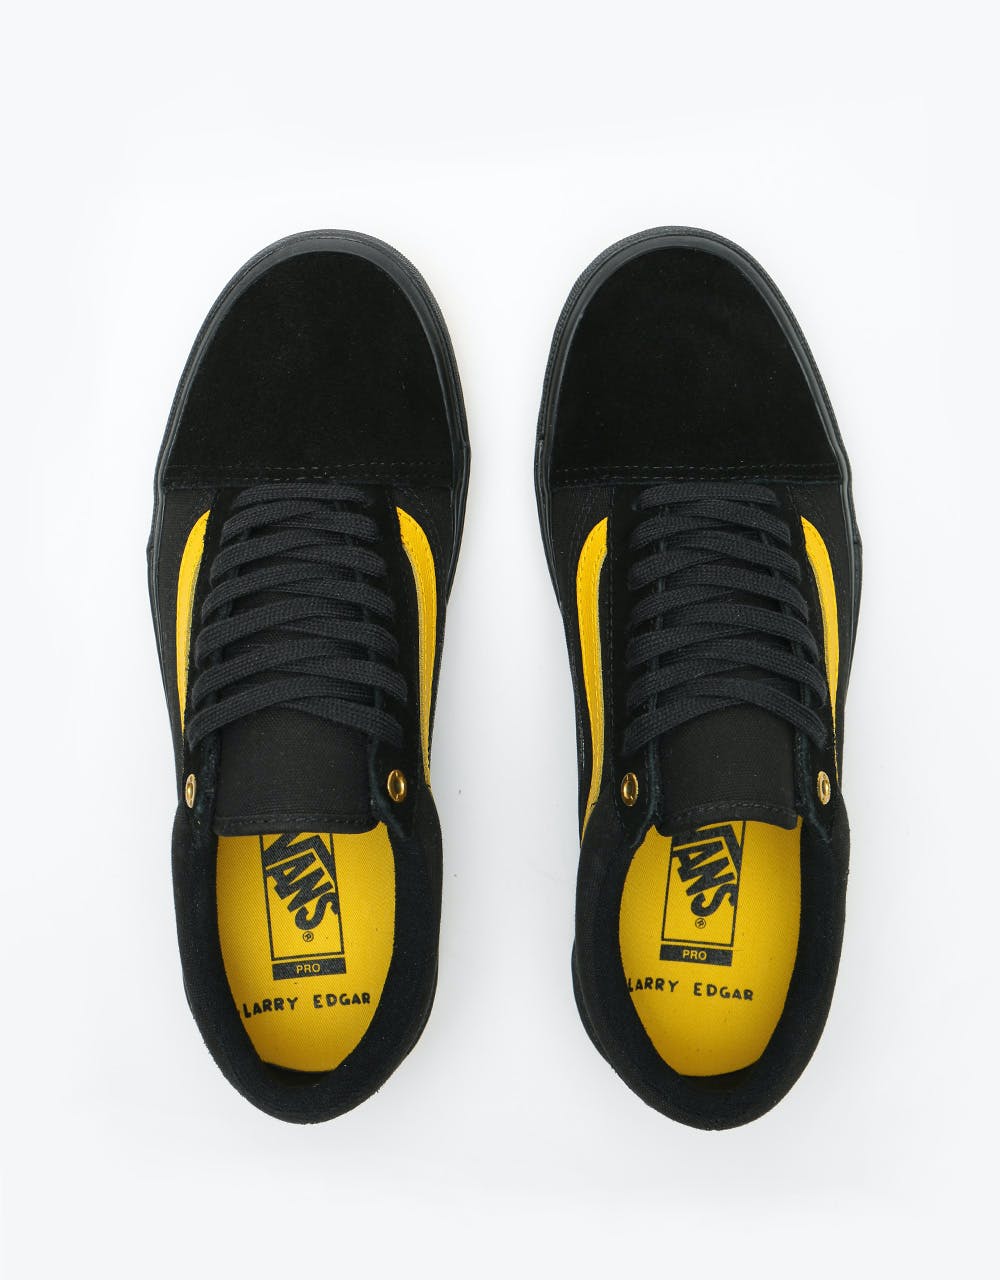 Vans Old Skool Pro BMX Skate Shoes - (Larry Edgar) Black/Yellow